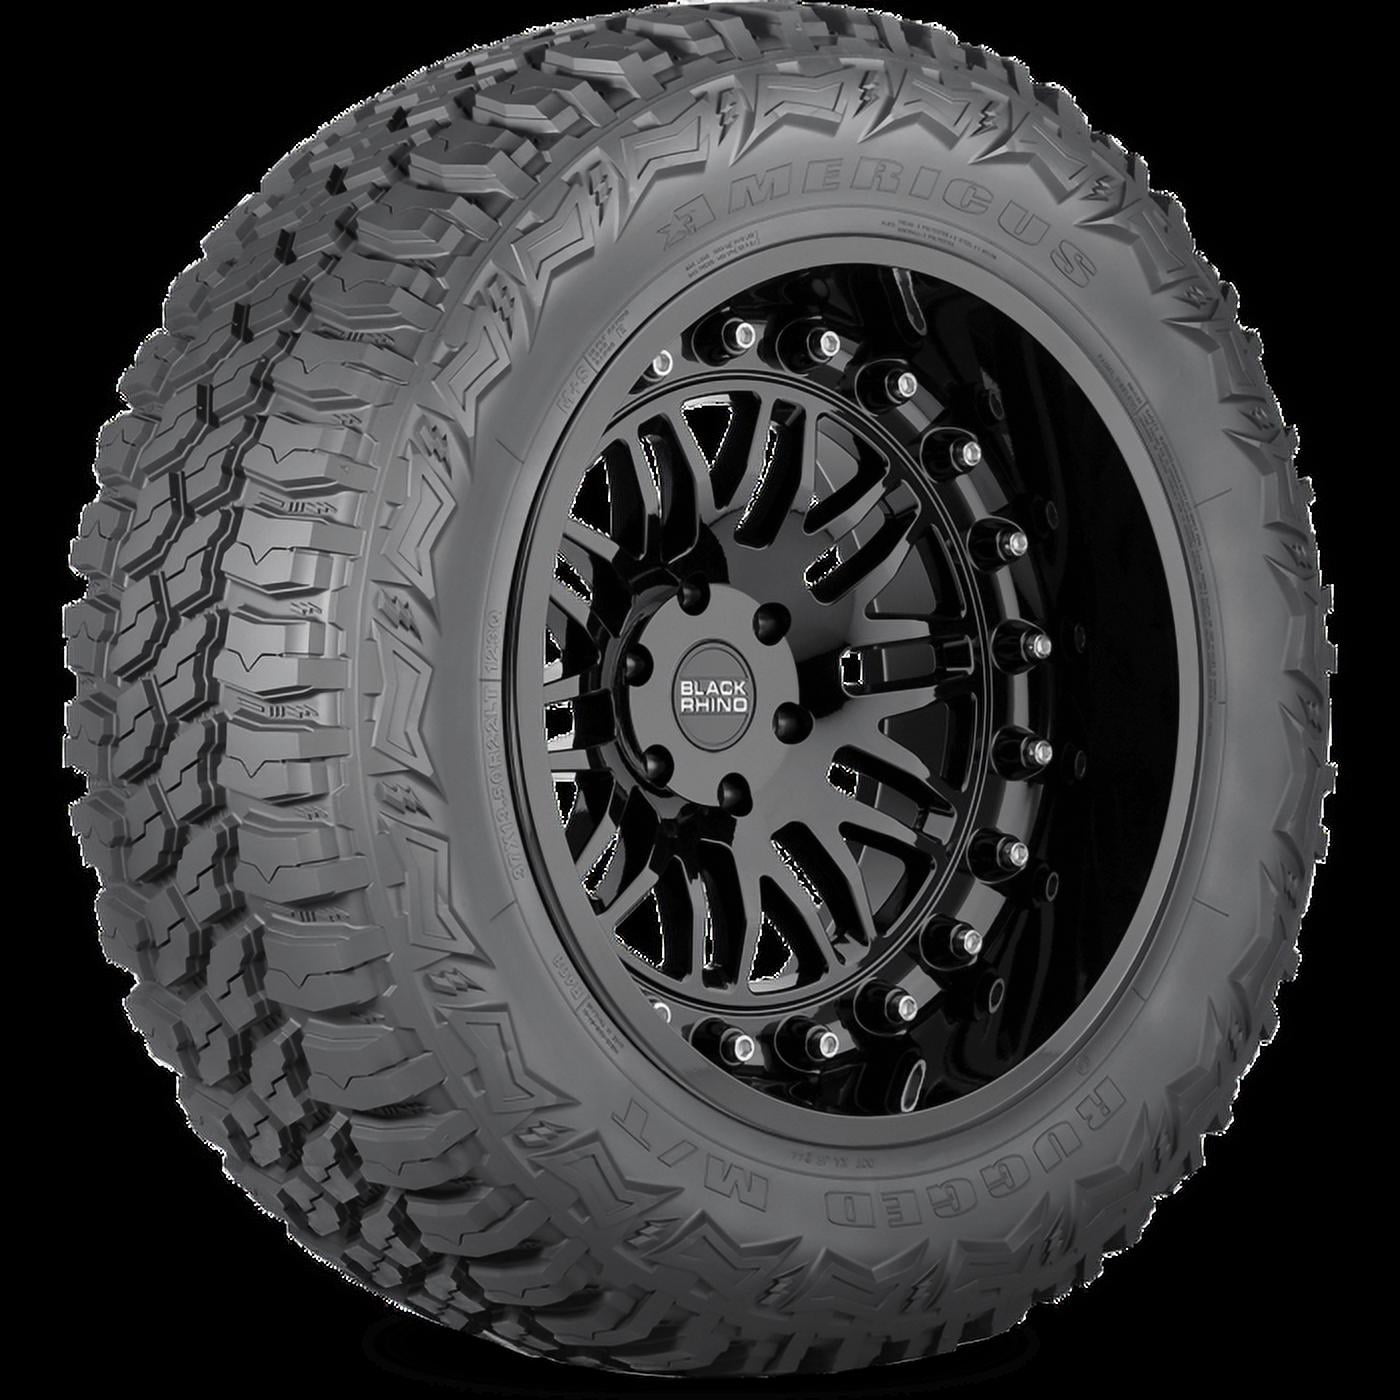 33X12.50R20 119 Q LRF 12PLY 33 12.5 R20 Americus Rugged M/T Mud-Terrain Tire